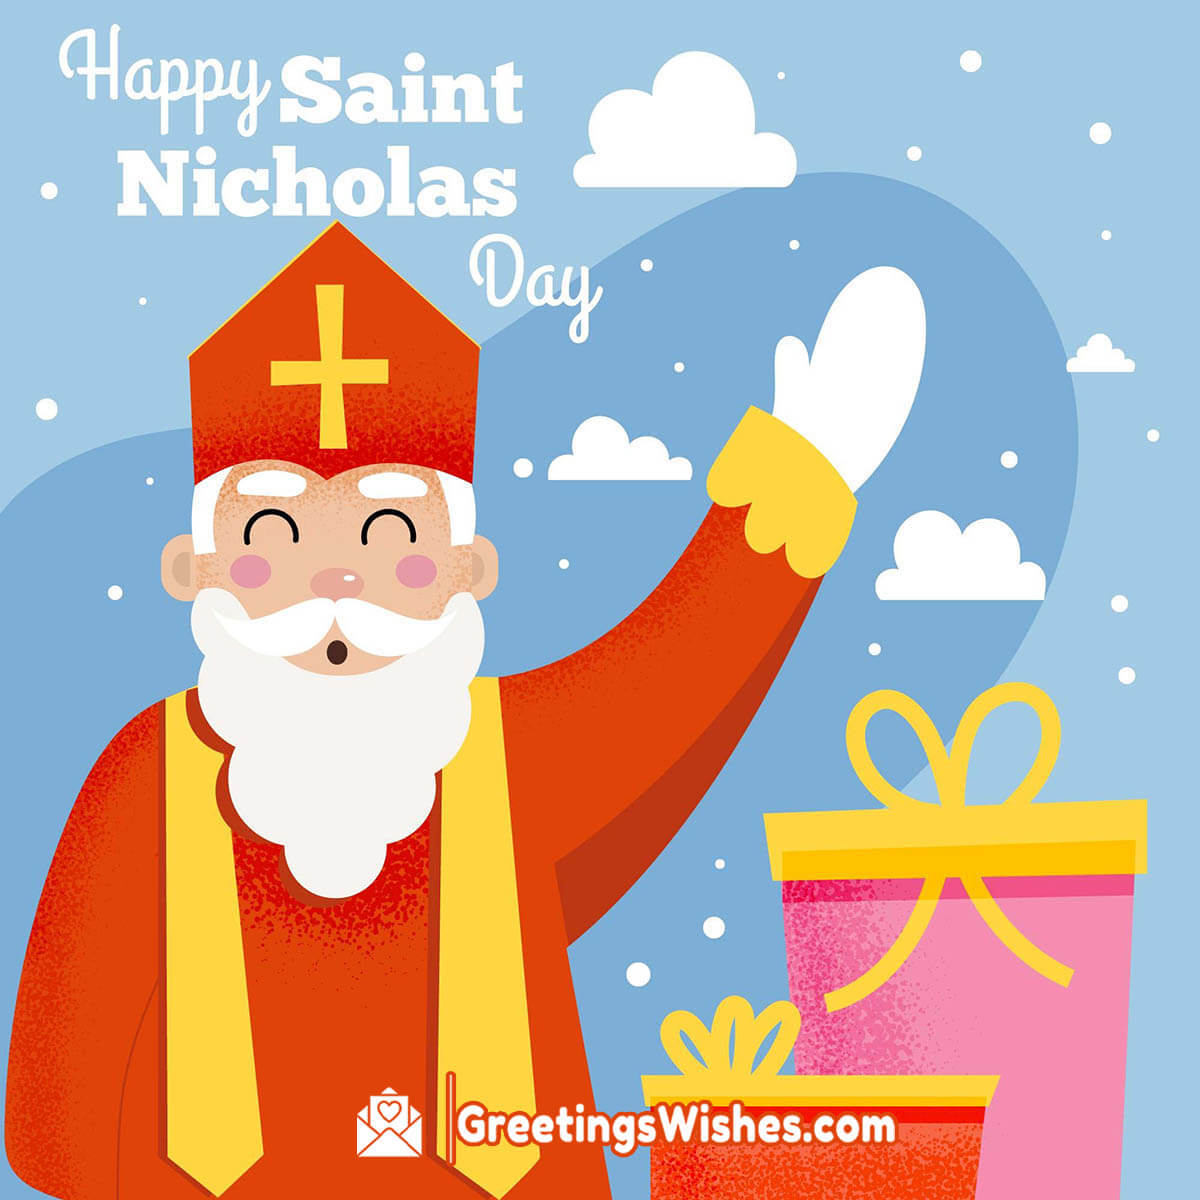 Happy St. Nicholas Day Pic